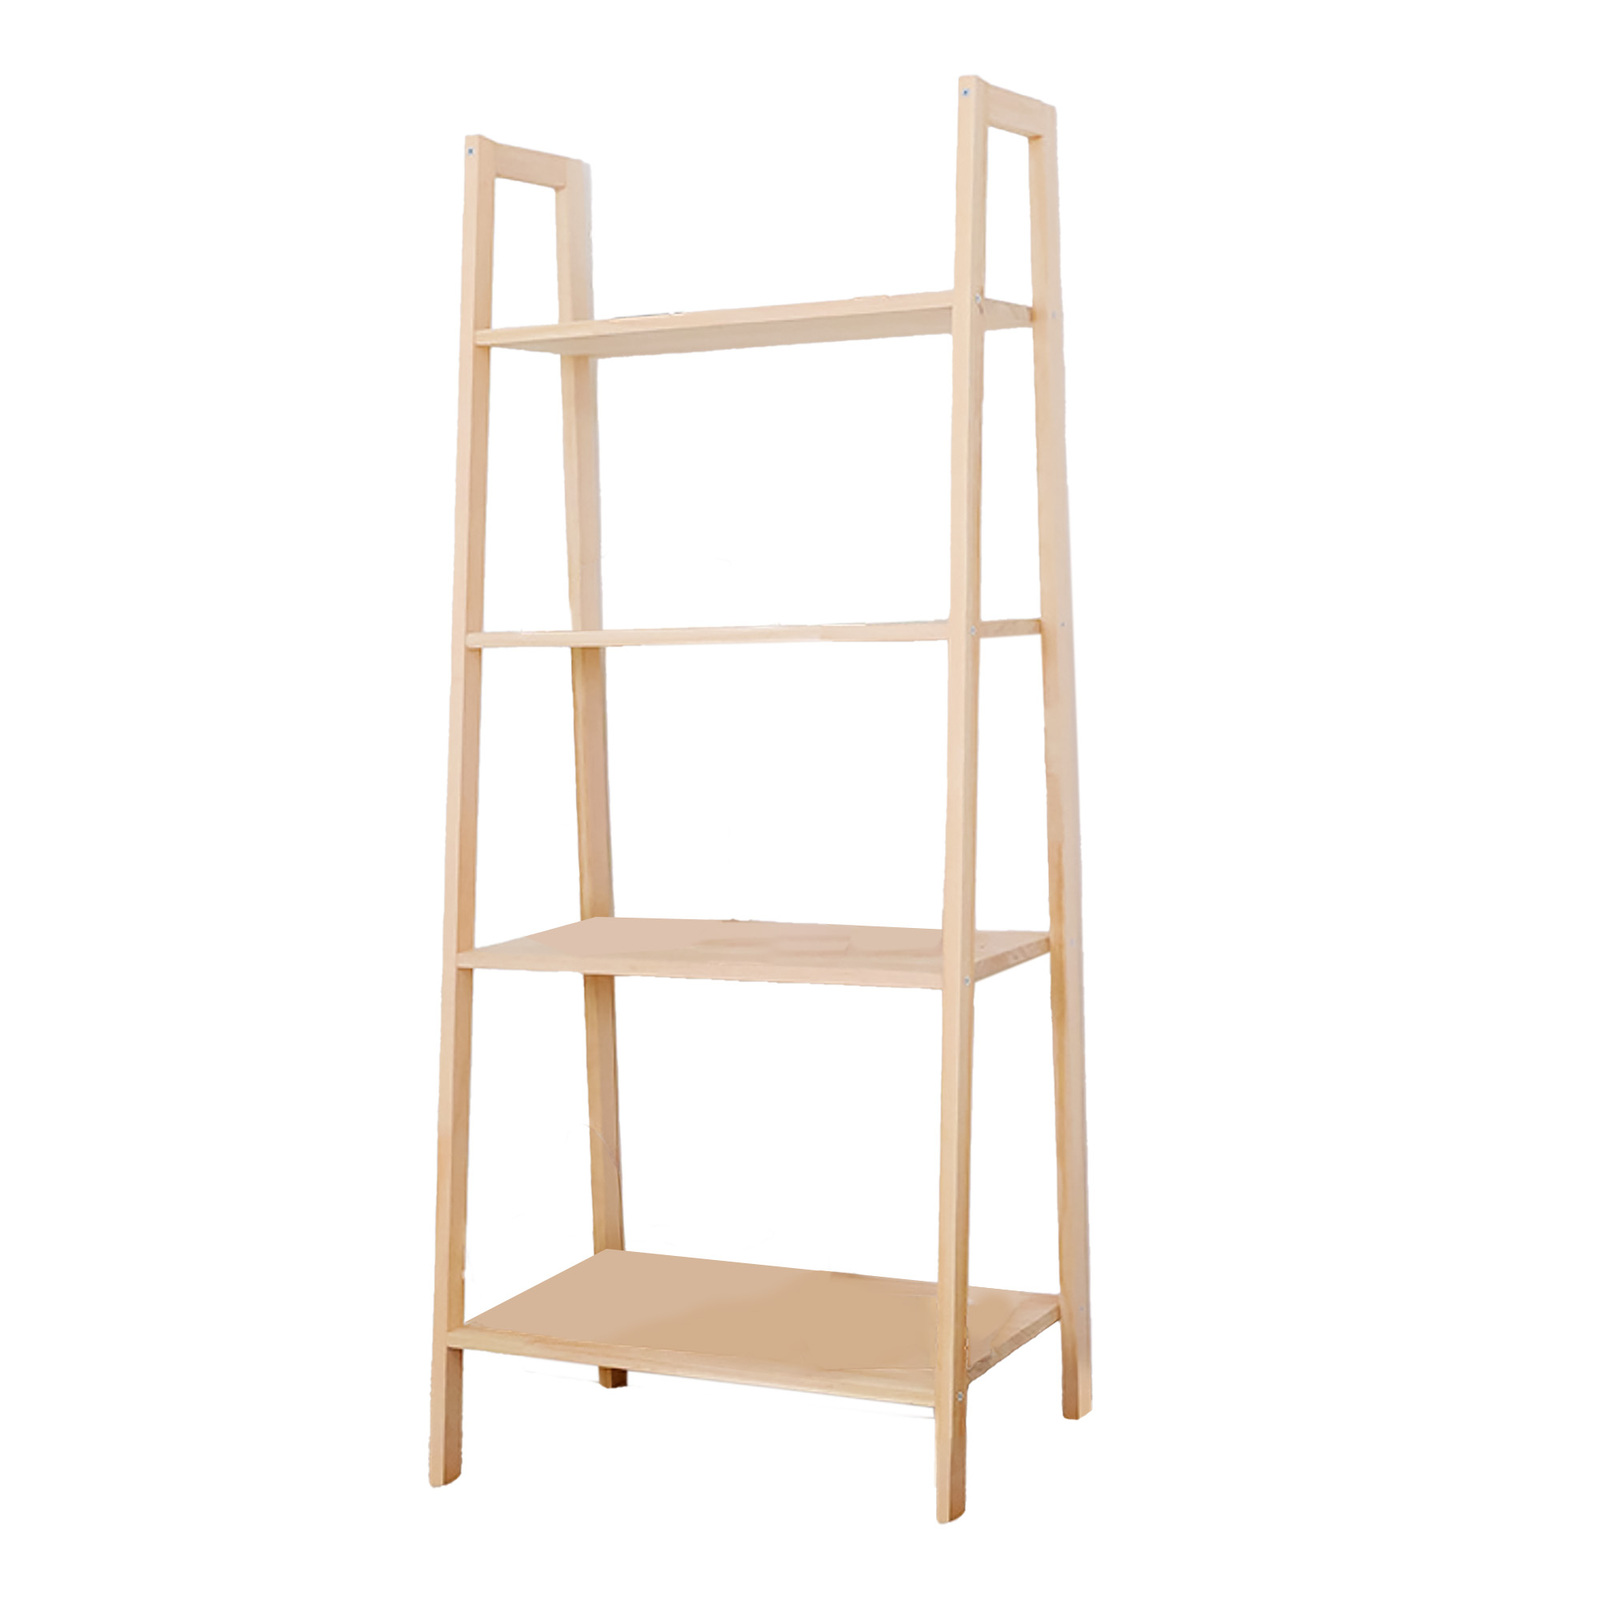 Solid Wood Display Shelf 4 Tier Wooden Ladder Stand Storage Book Shelves Rack